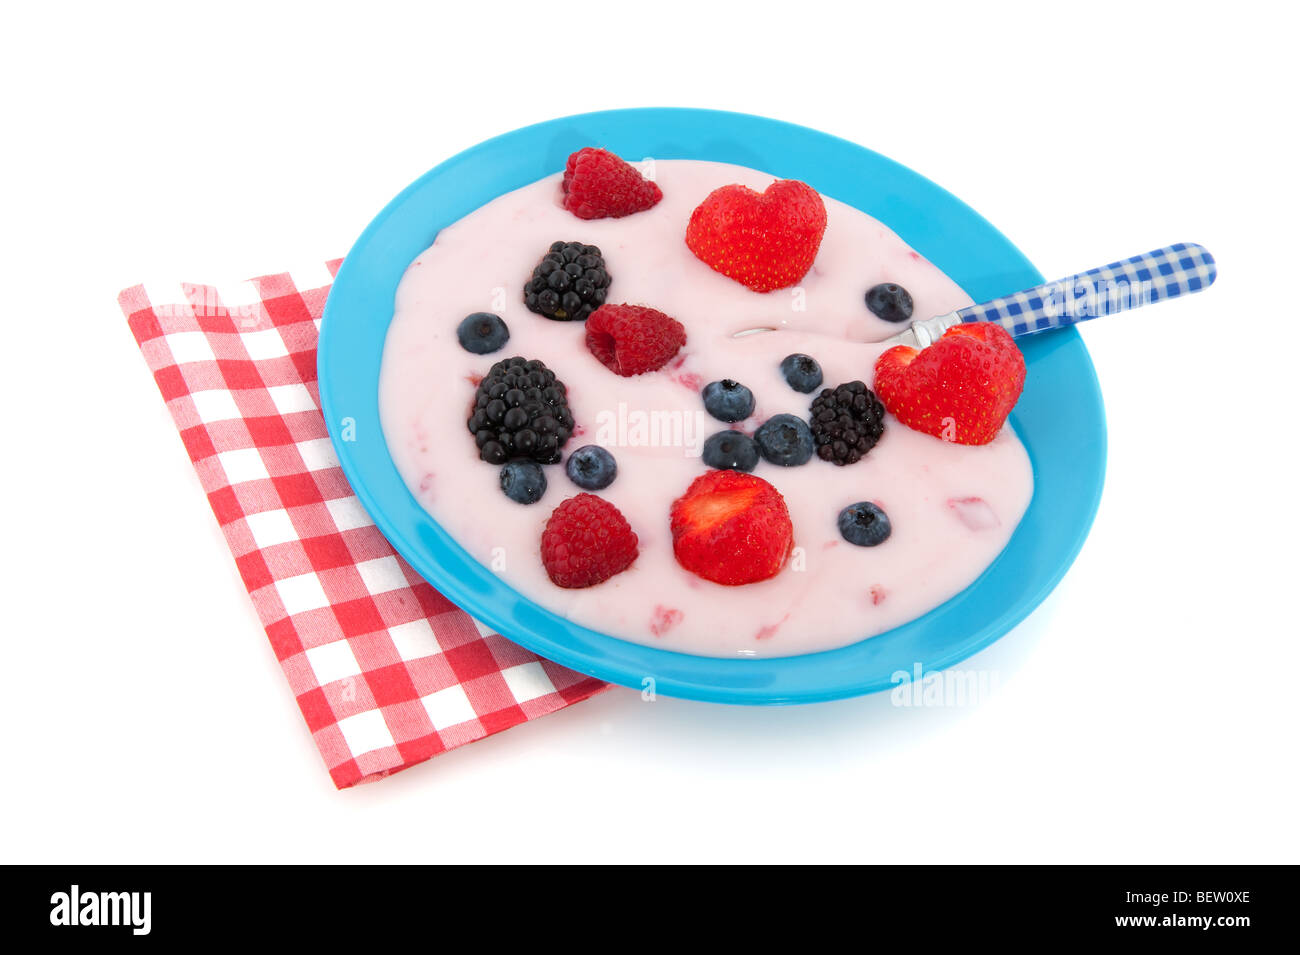 Fruit yogurt with raspberries blackberries blueberries and strawberries Stock Photo